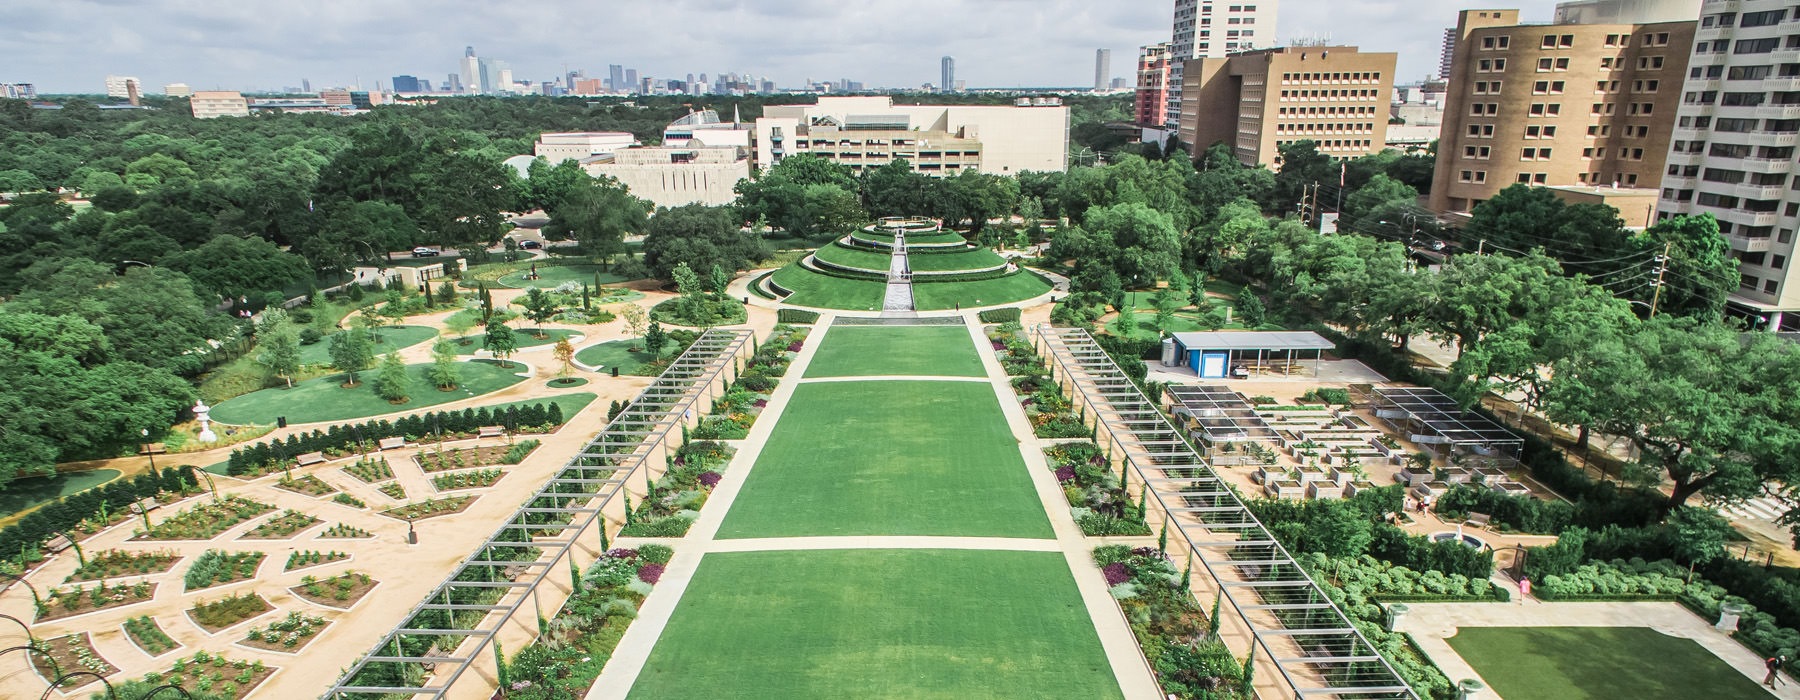 Hermann park, Houston, Texas